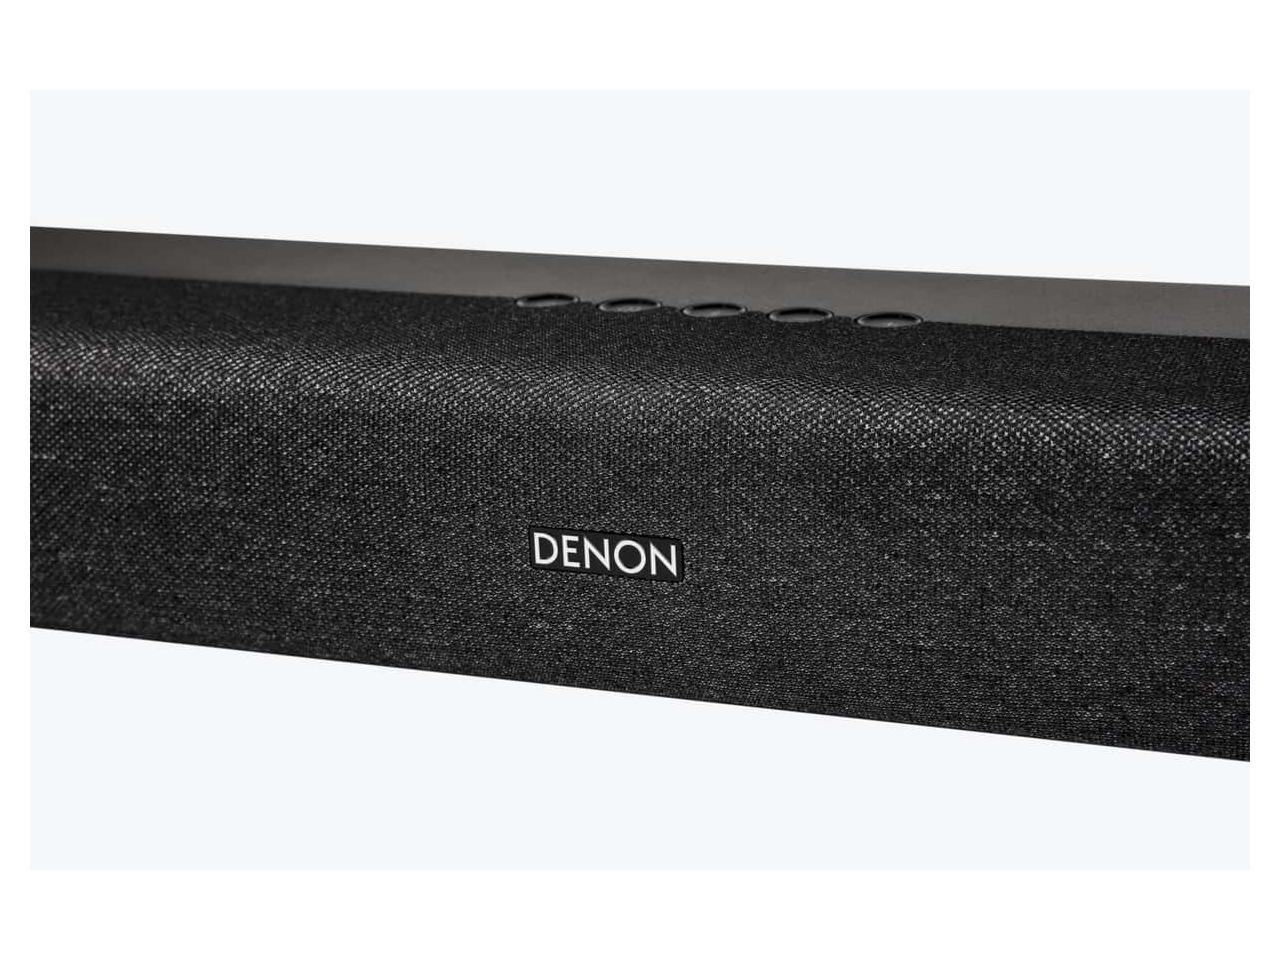 DENON デノン DHT-S217-K BLACK スピーカー サウンドバー+bdqmgt.com